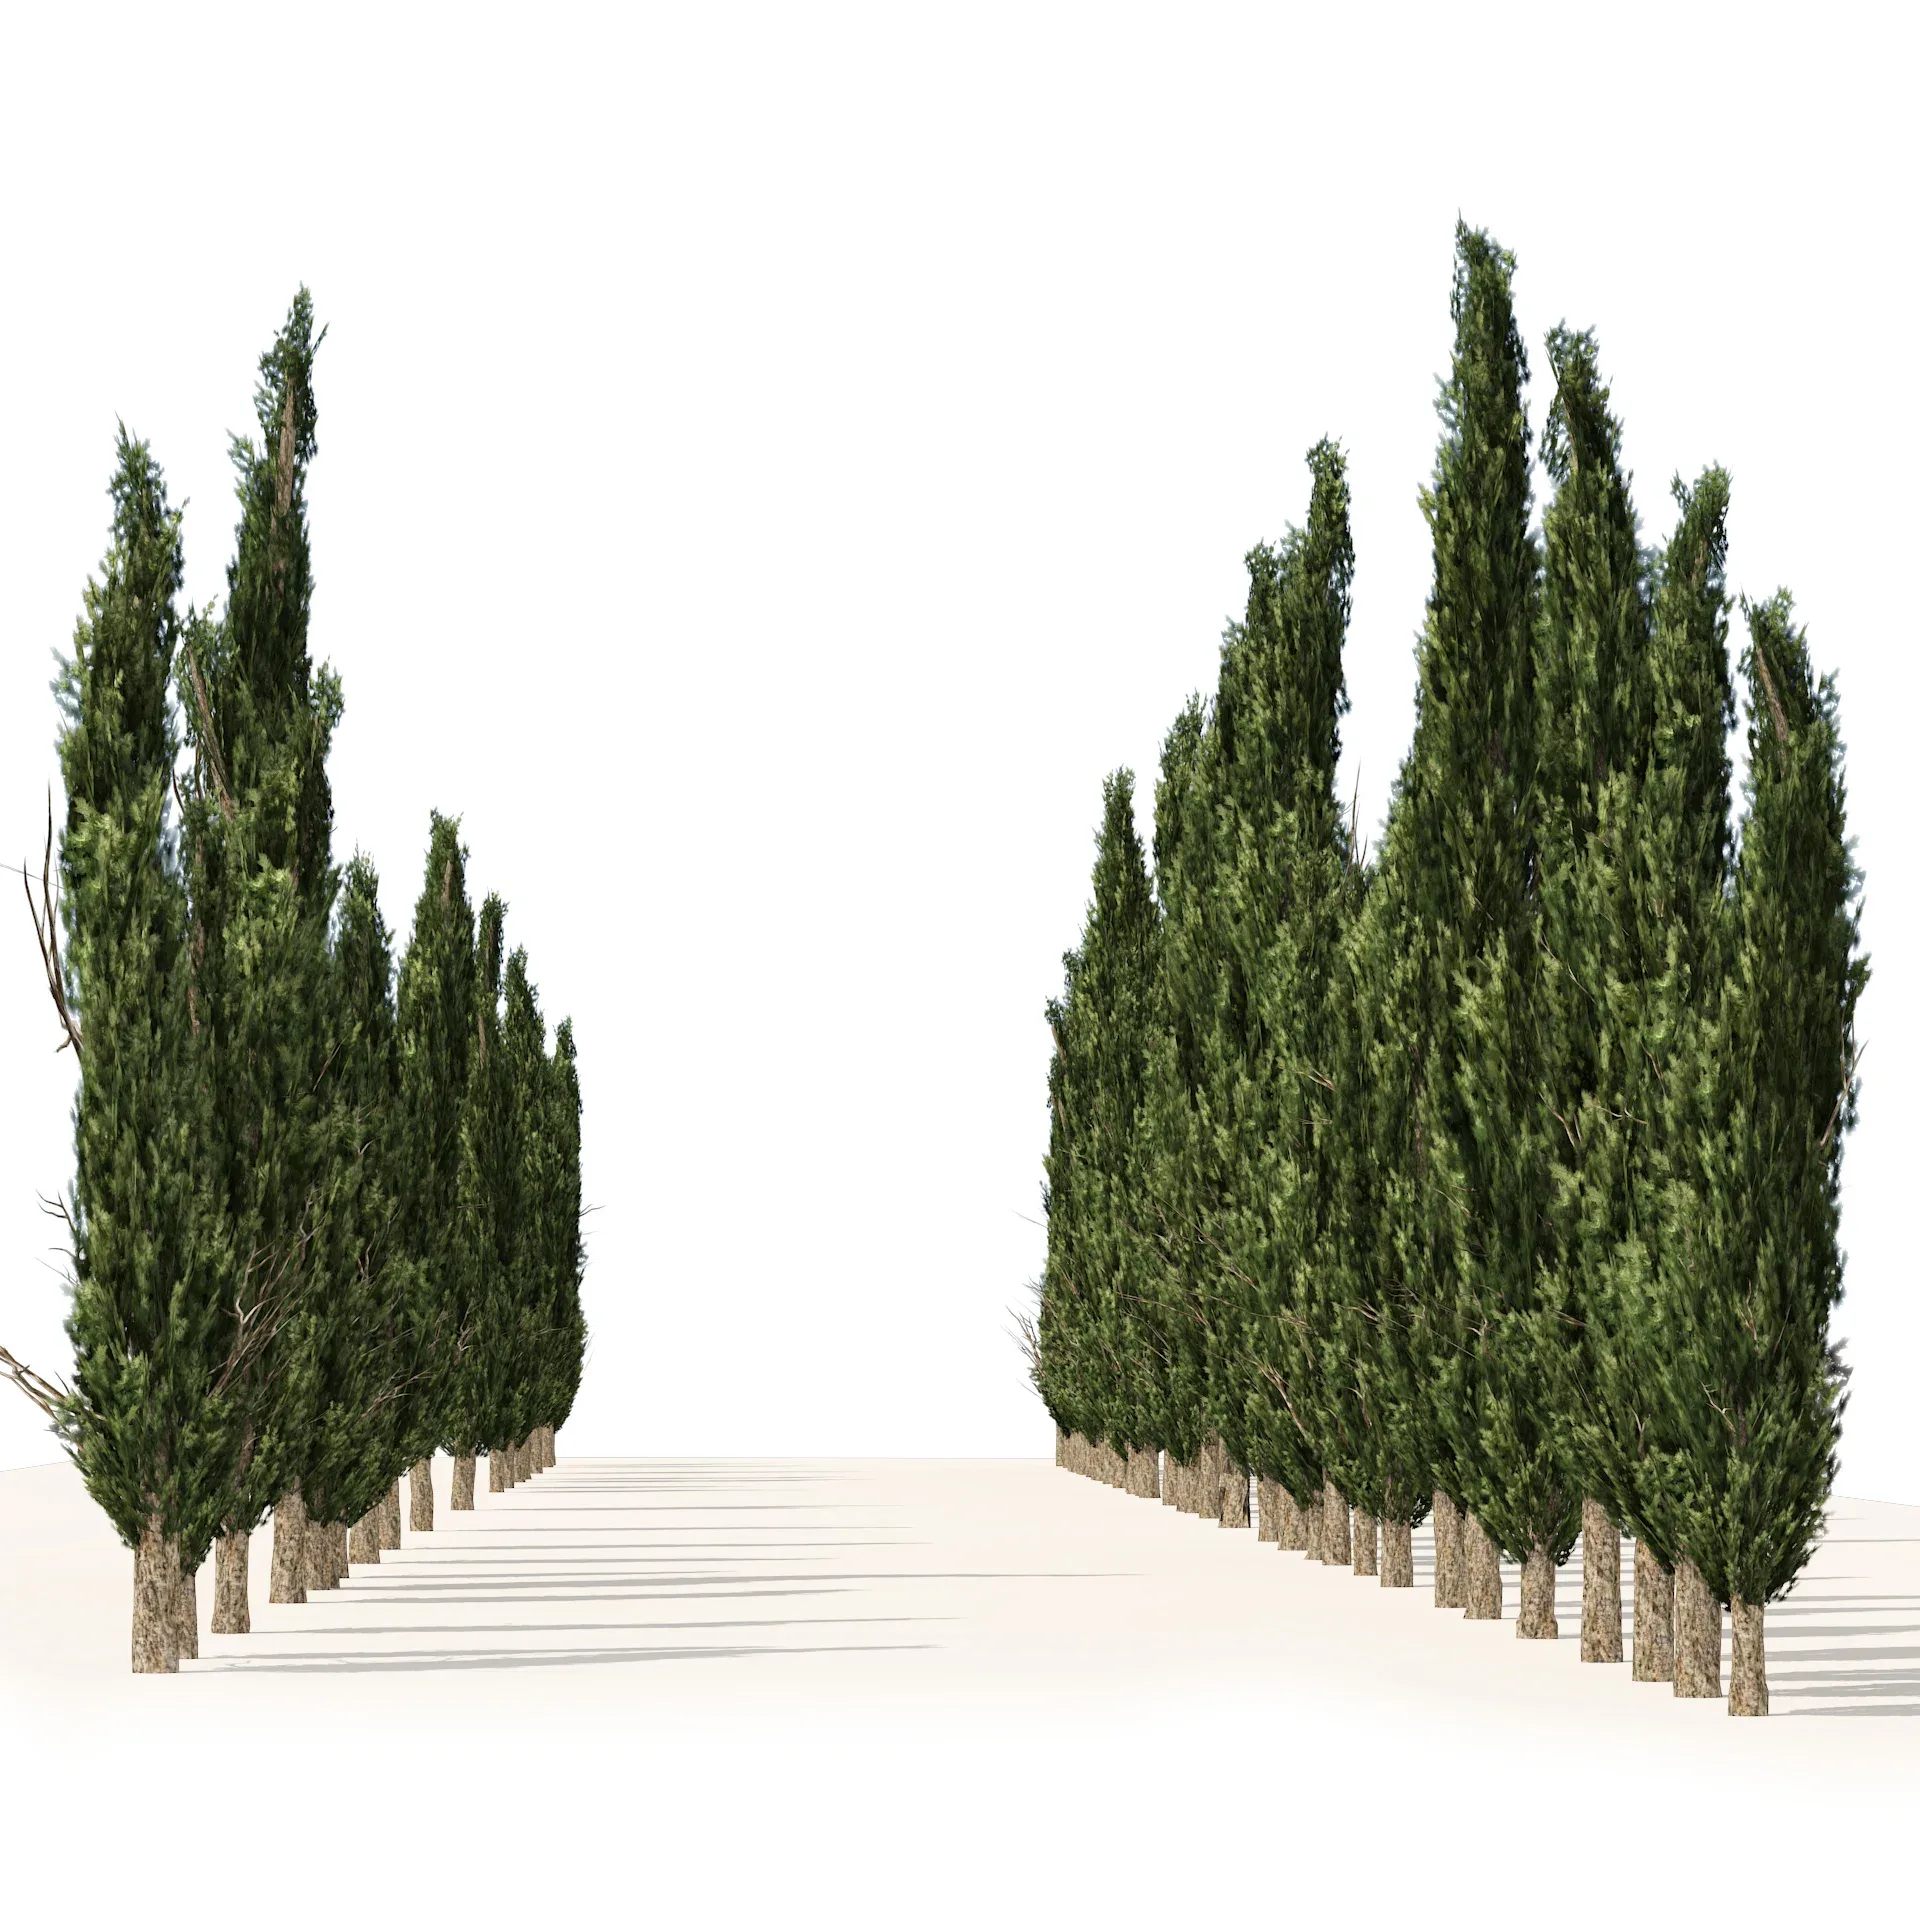 Mediterranean cypress trees